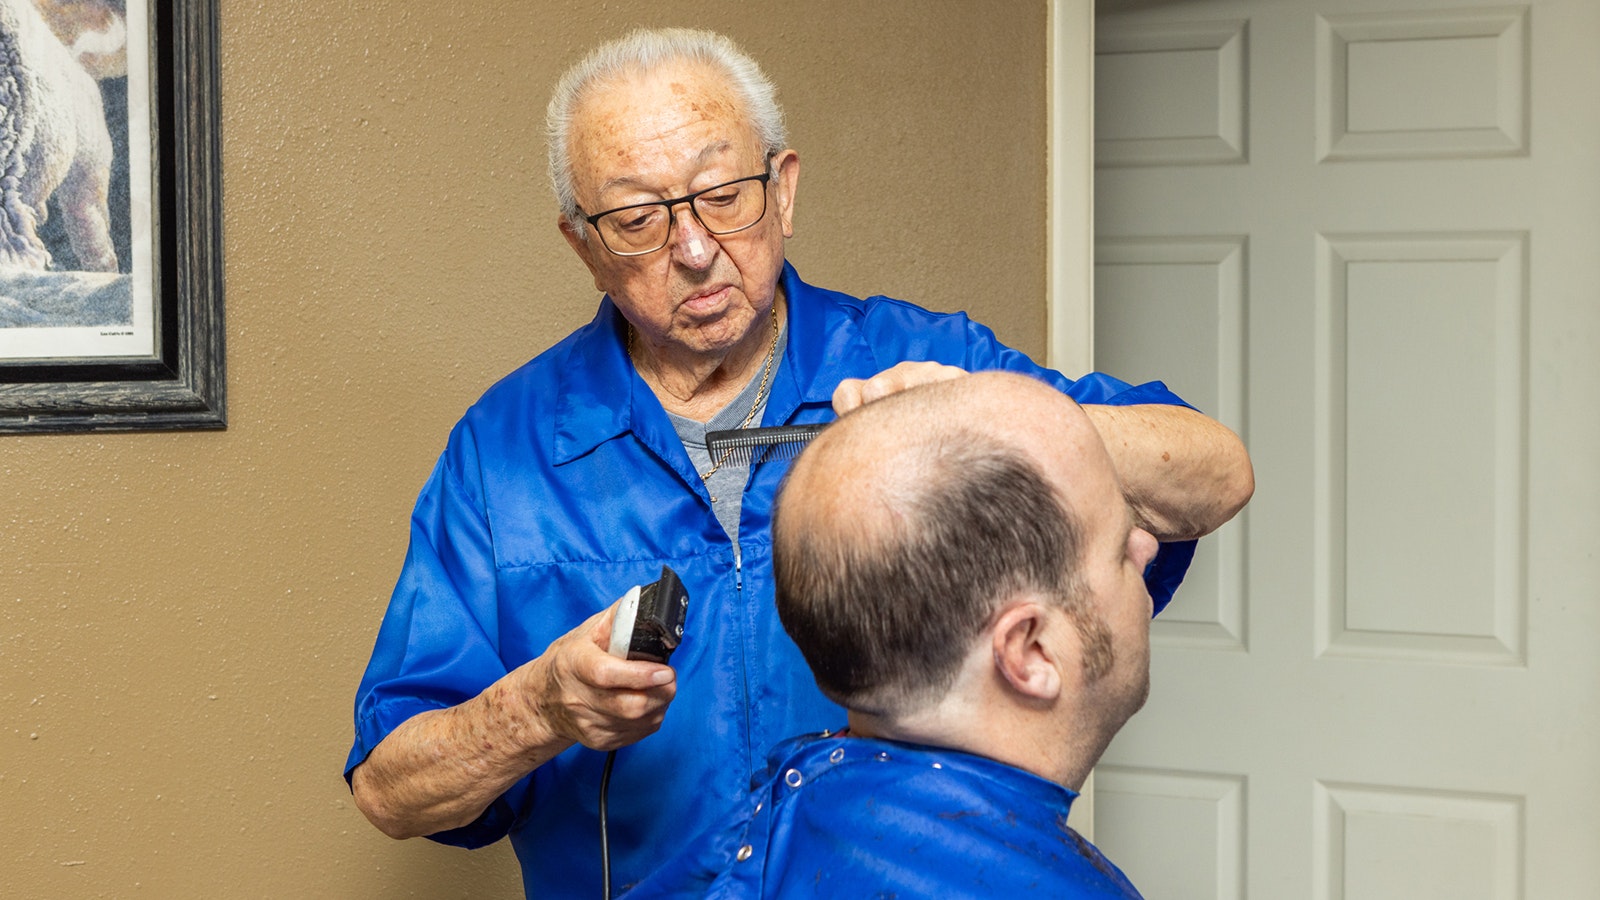 Eli Trujillo, 86, cuts Jeff Weehunt's hair at Trujillo's Barber Shop at 412 Randall Ave. in Cheyenne. At 86, Trujillo still cuts hair five days a week.